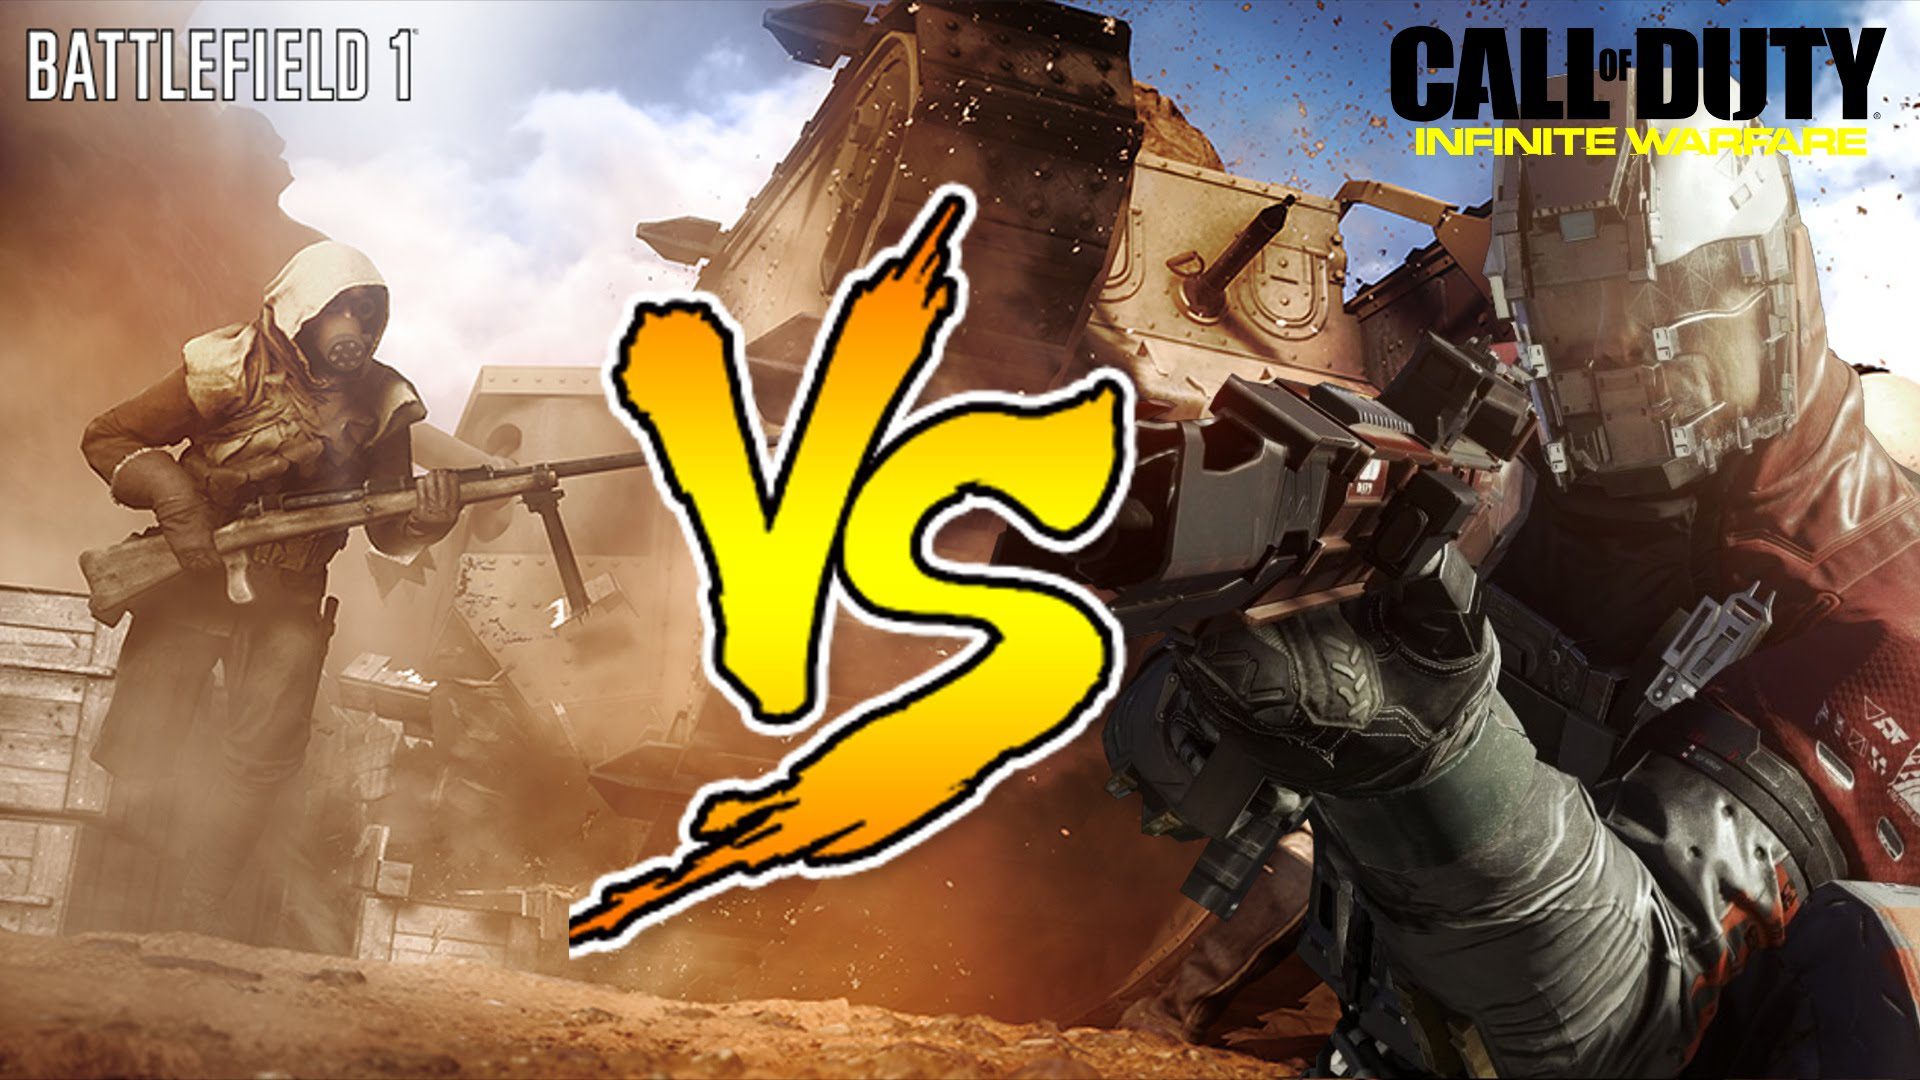 La verdadera Guerra Civil: Battlefield vs Call of Duty